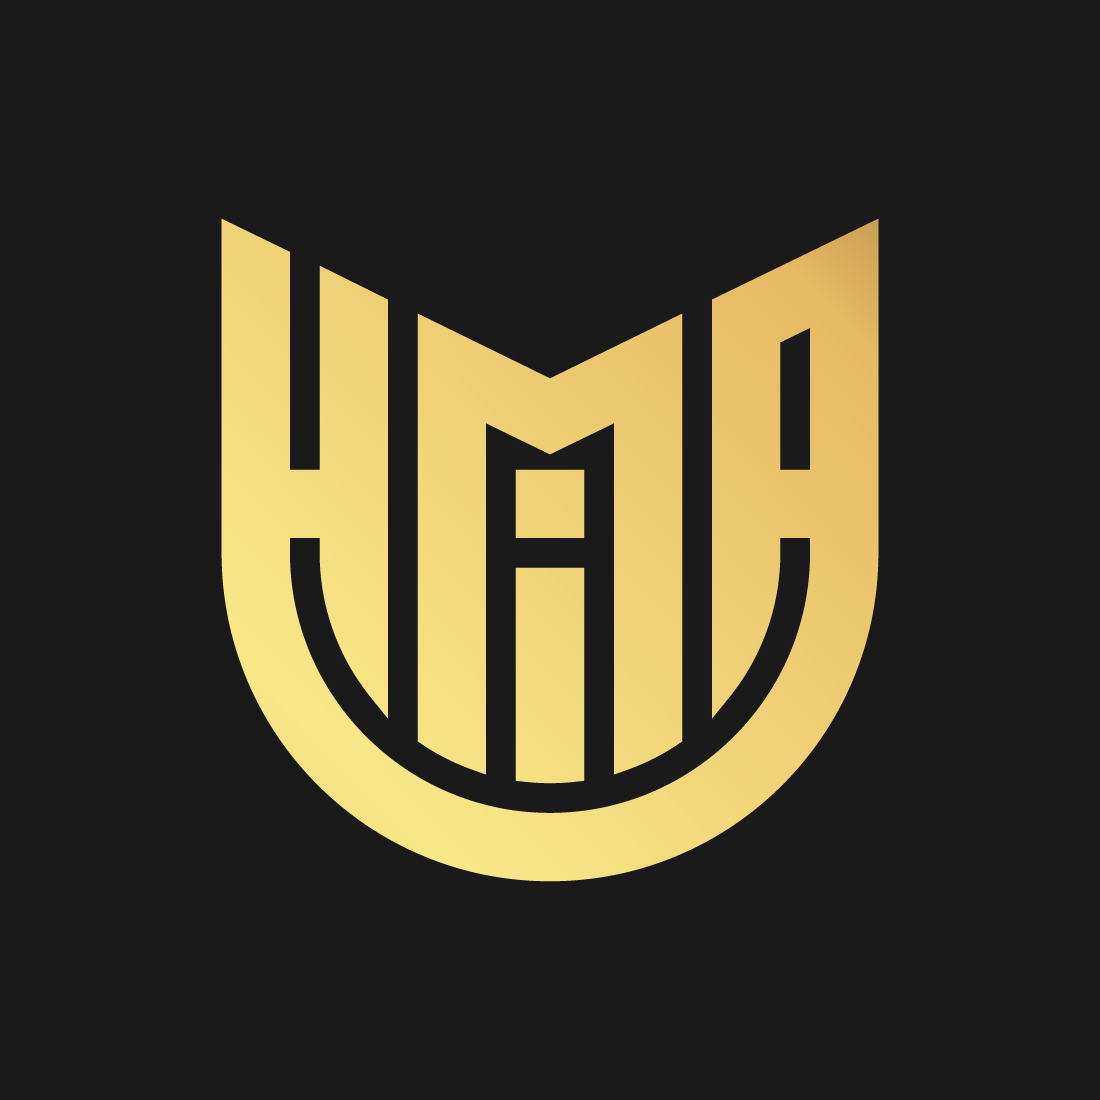 HMIA Logo design preview image.